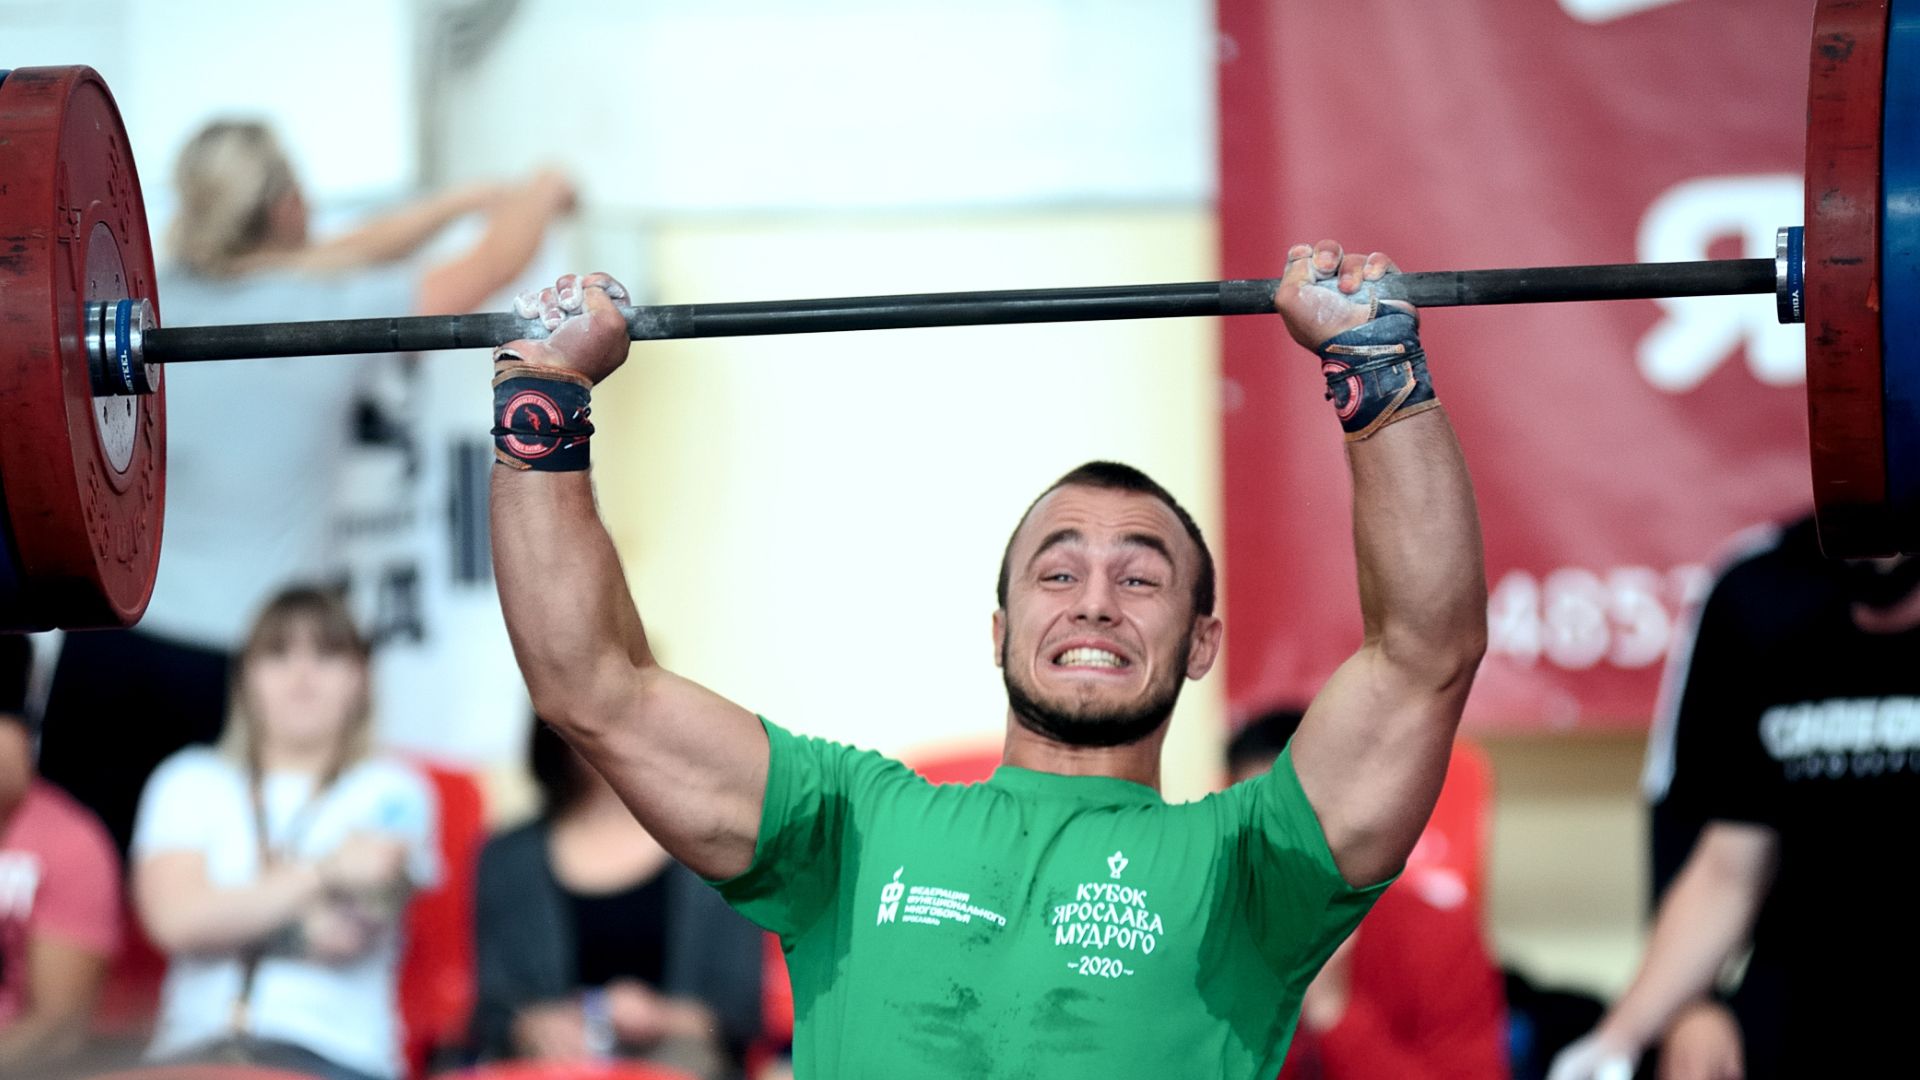 Man in Green Shirt Lifting Weights